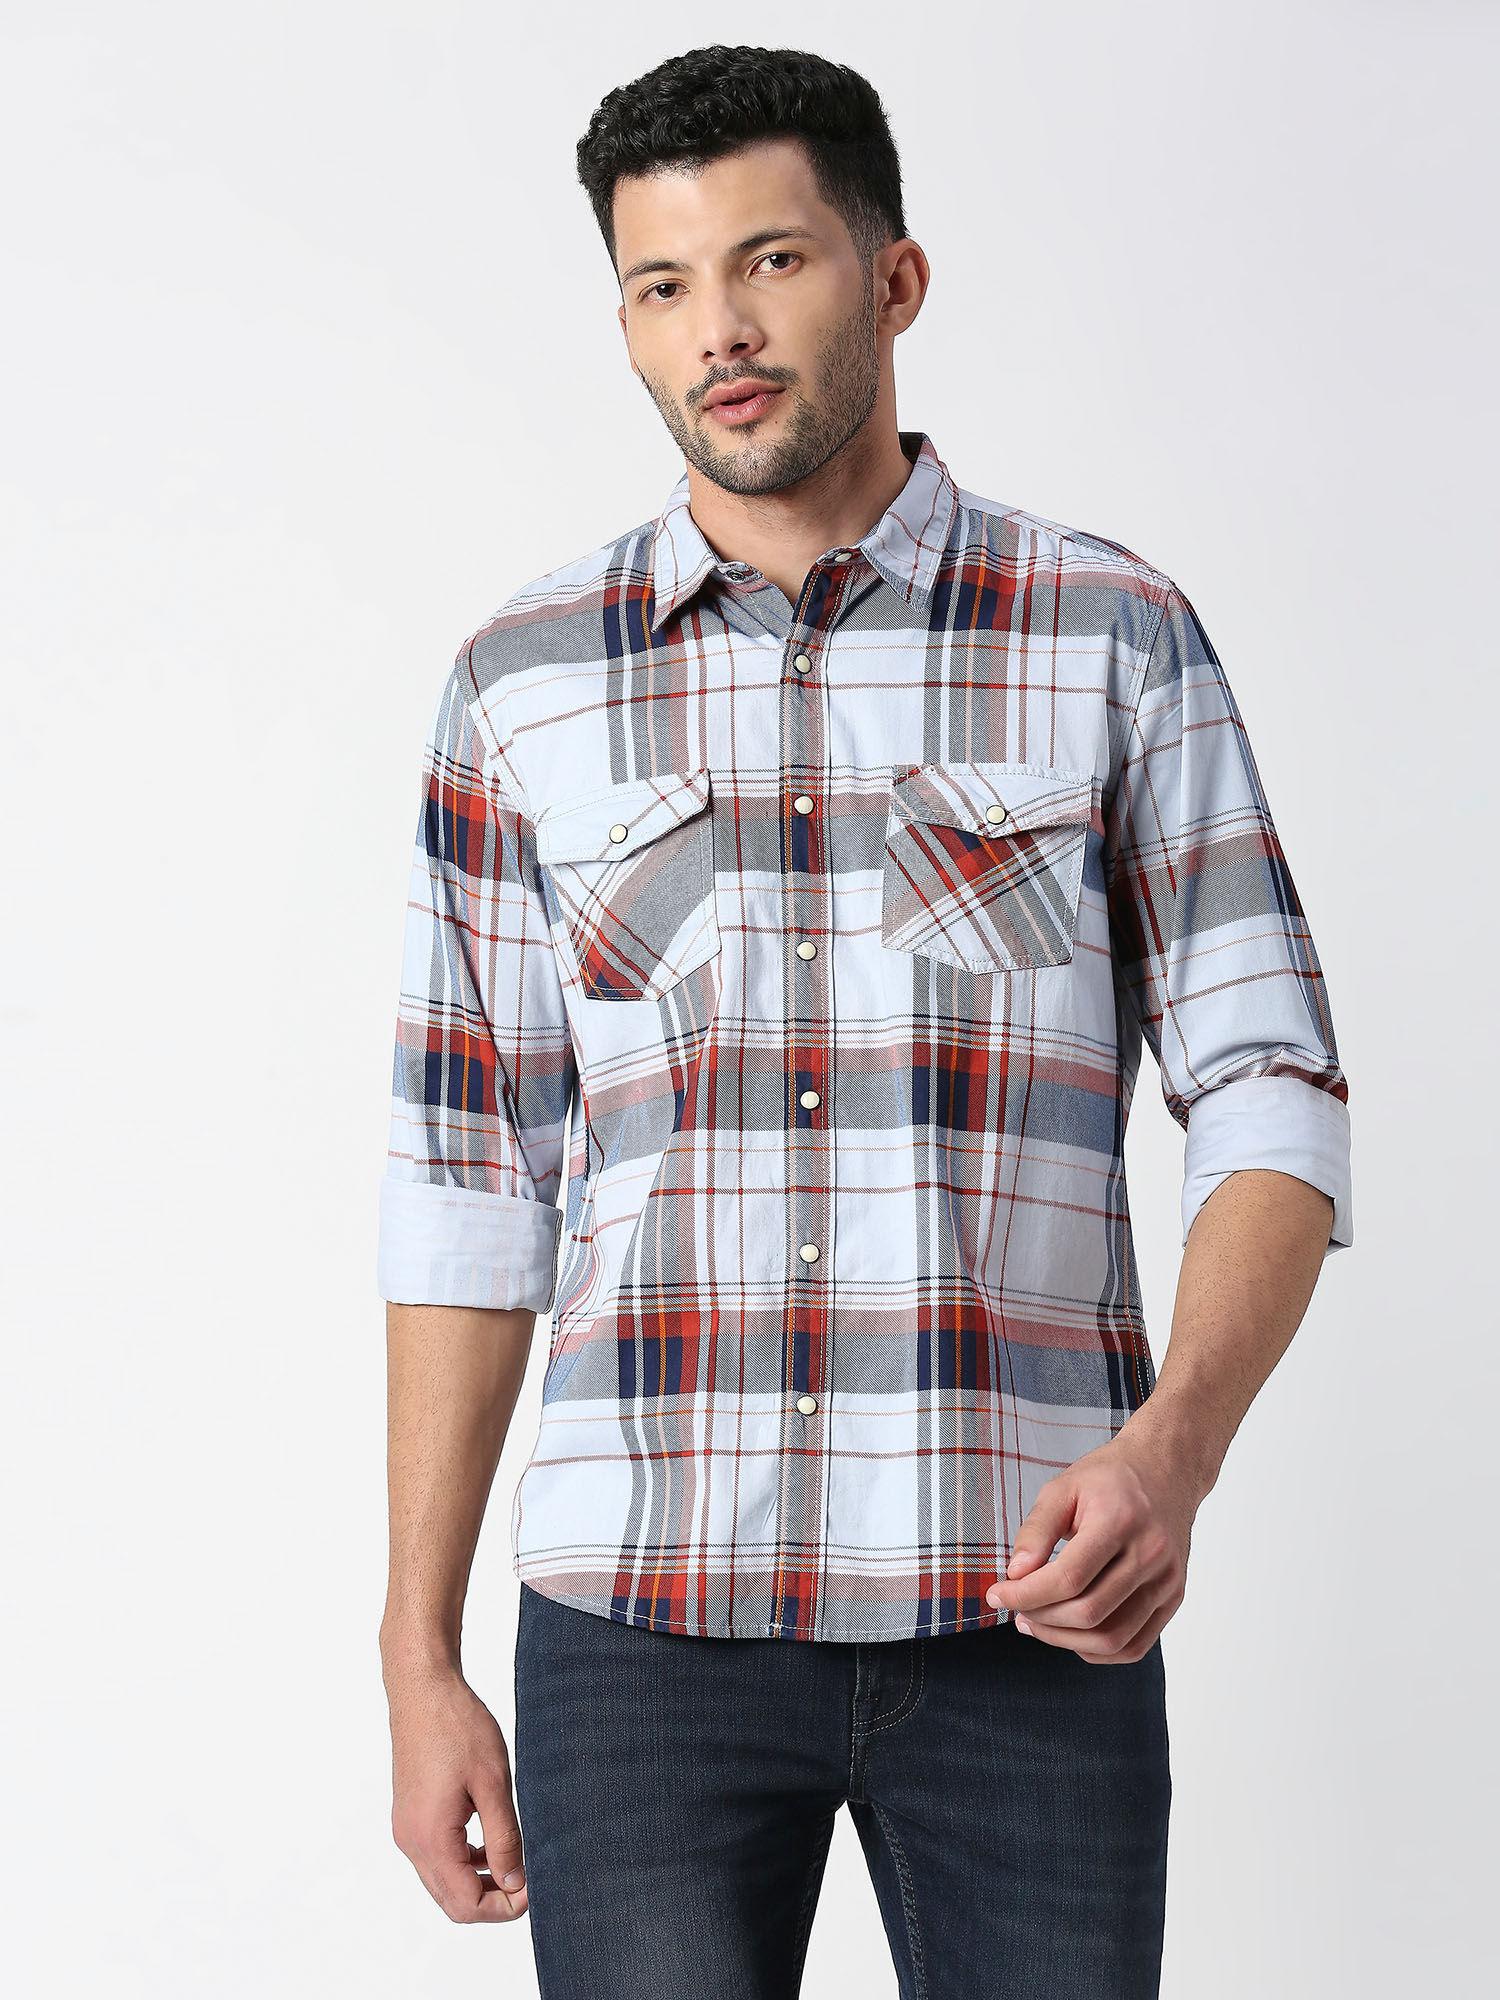 tanner-full-sleeves-printed-checks-casual-shirt